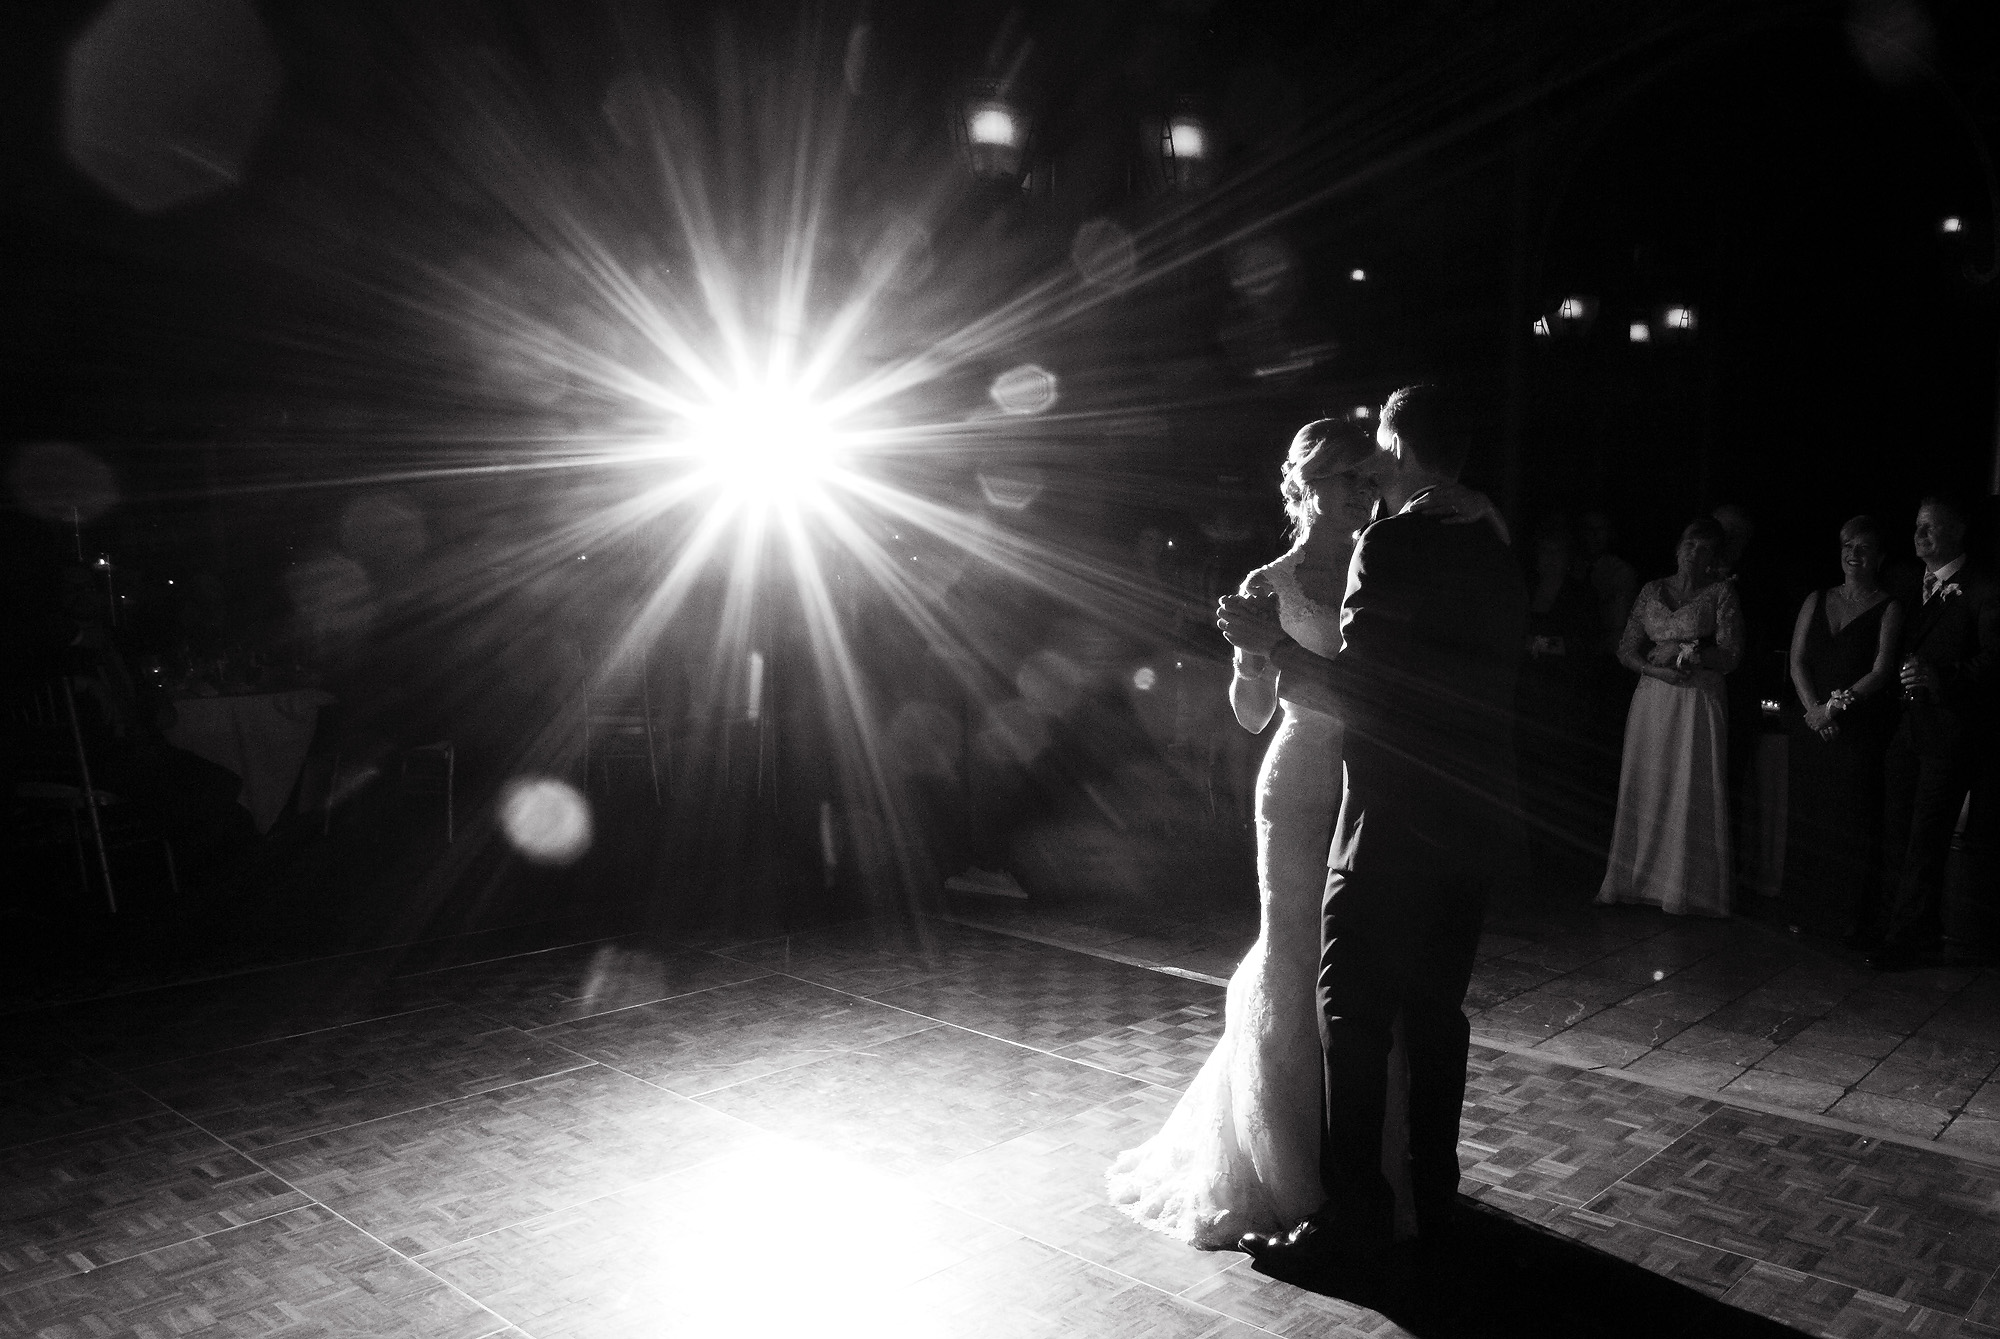 fall michigan wedding photographer fall bride groom